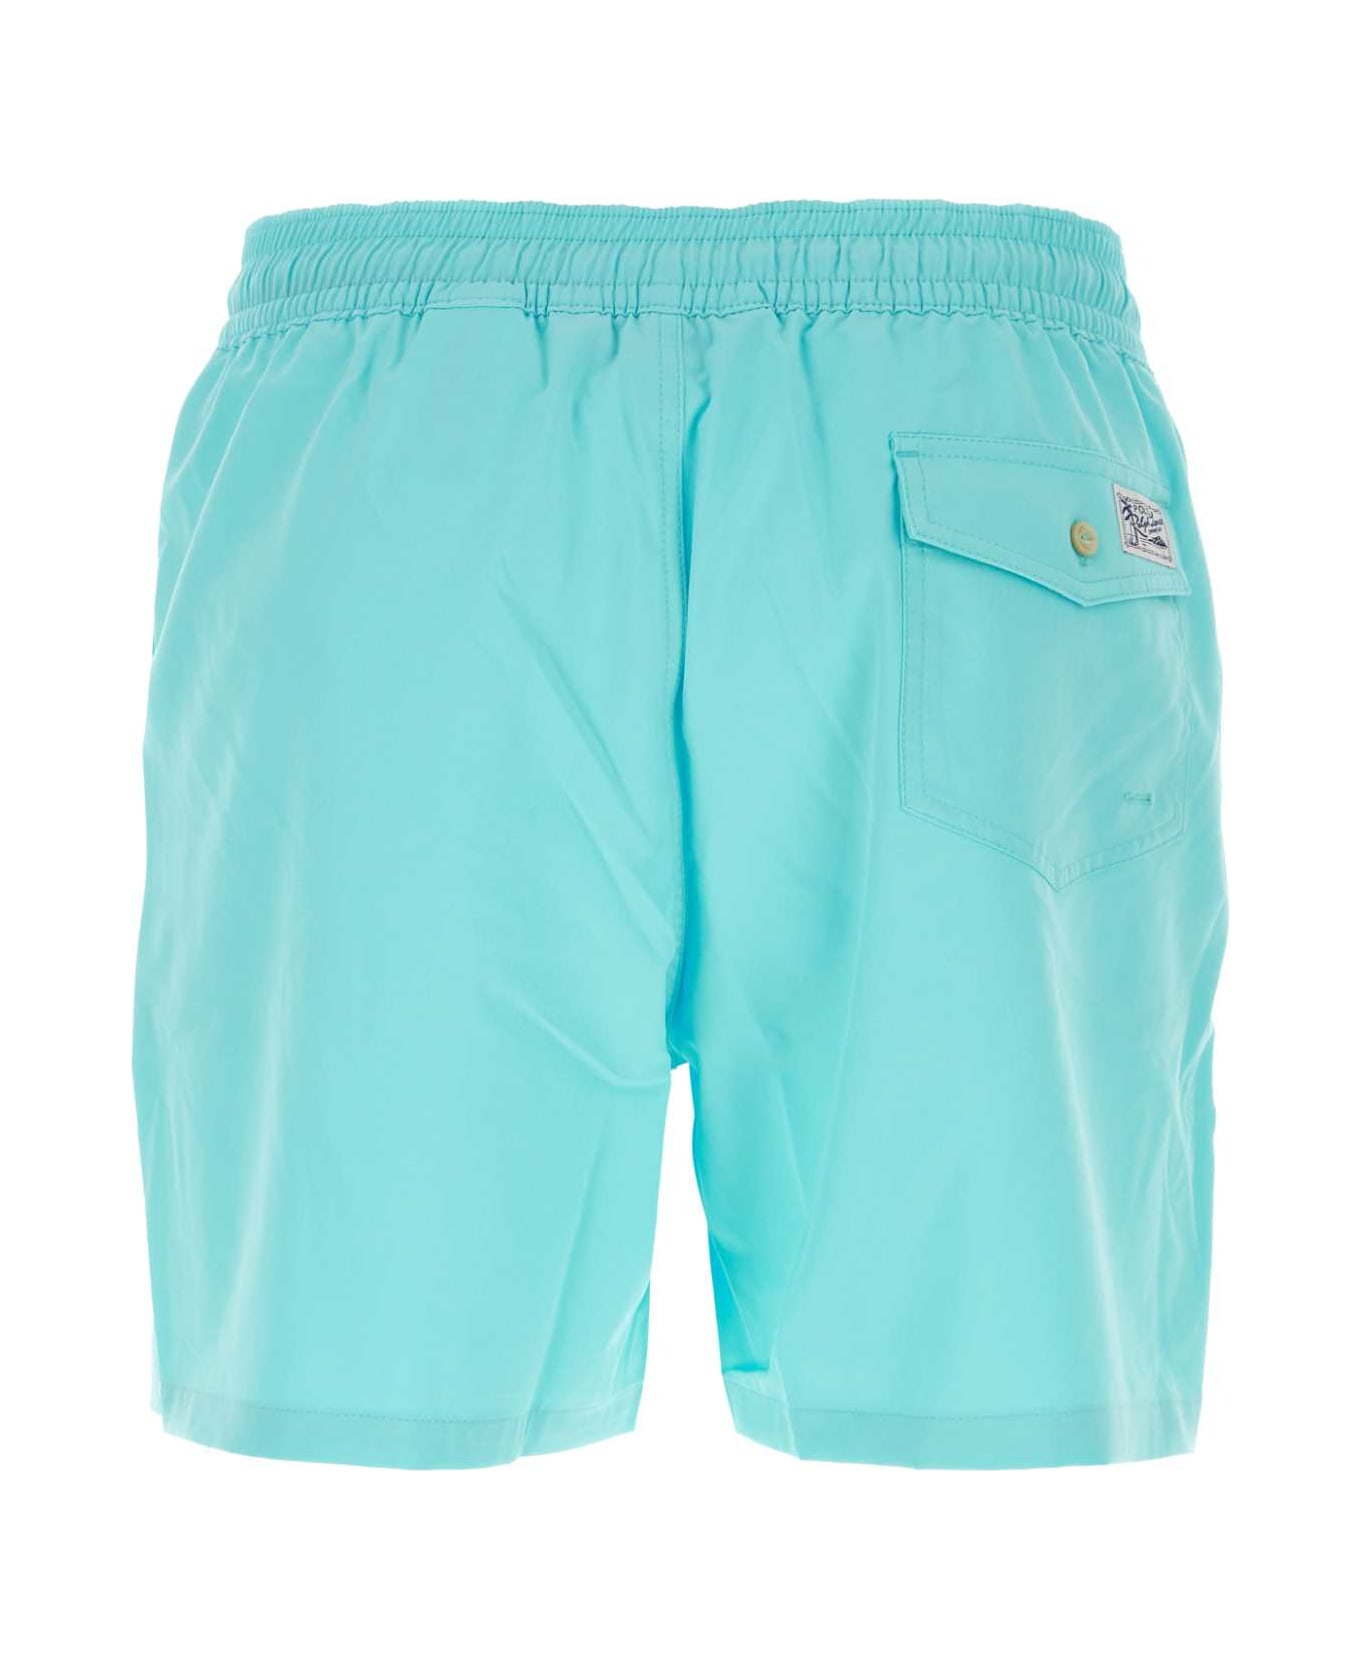 Polo Ralph Lauren Tiffany Stretch Polyester Swimming Shorts - HAMMONDBLUE